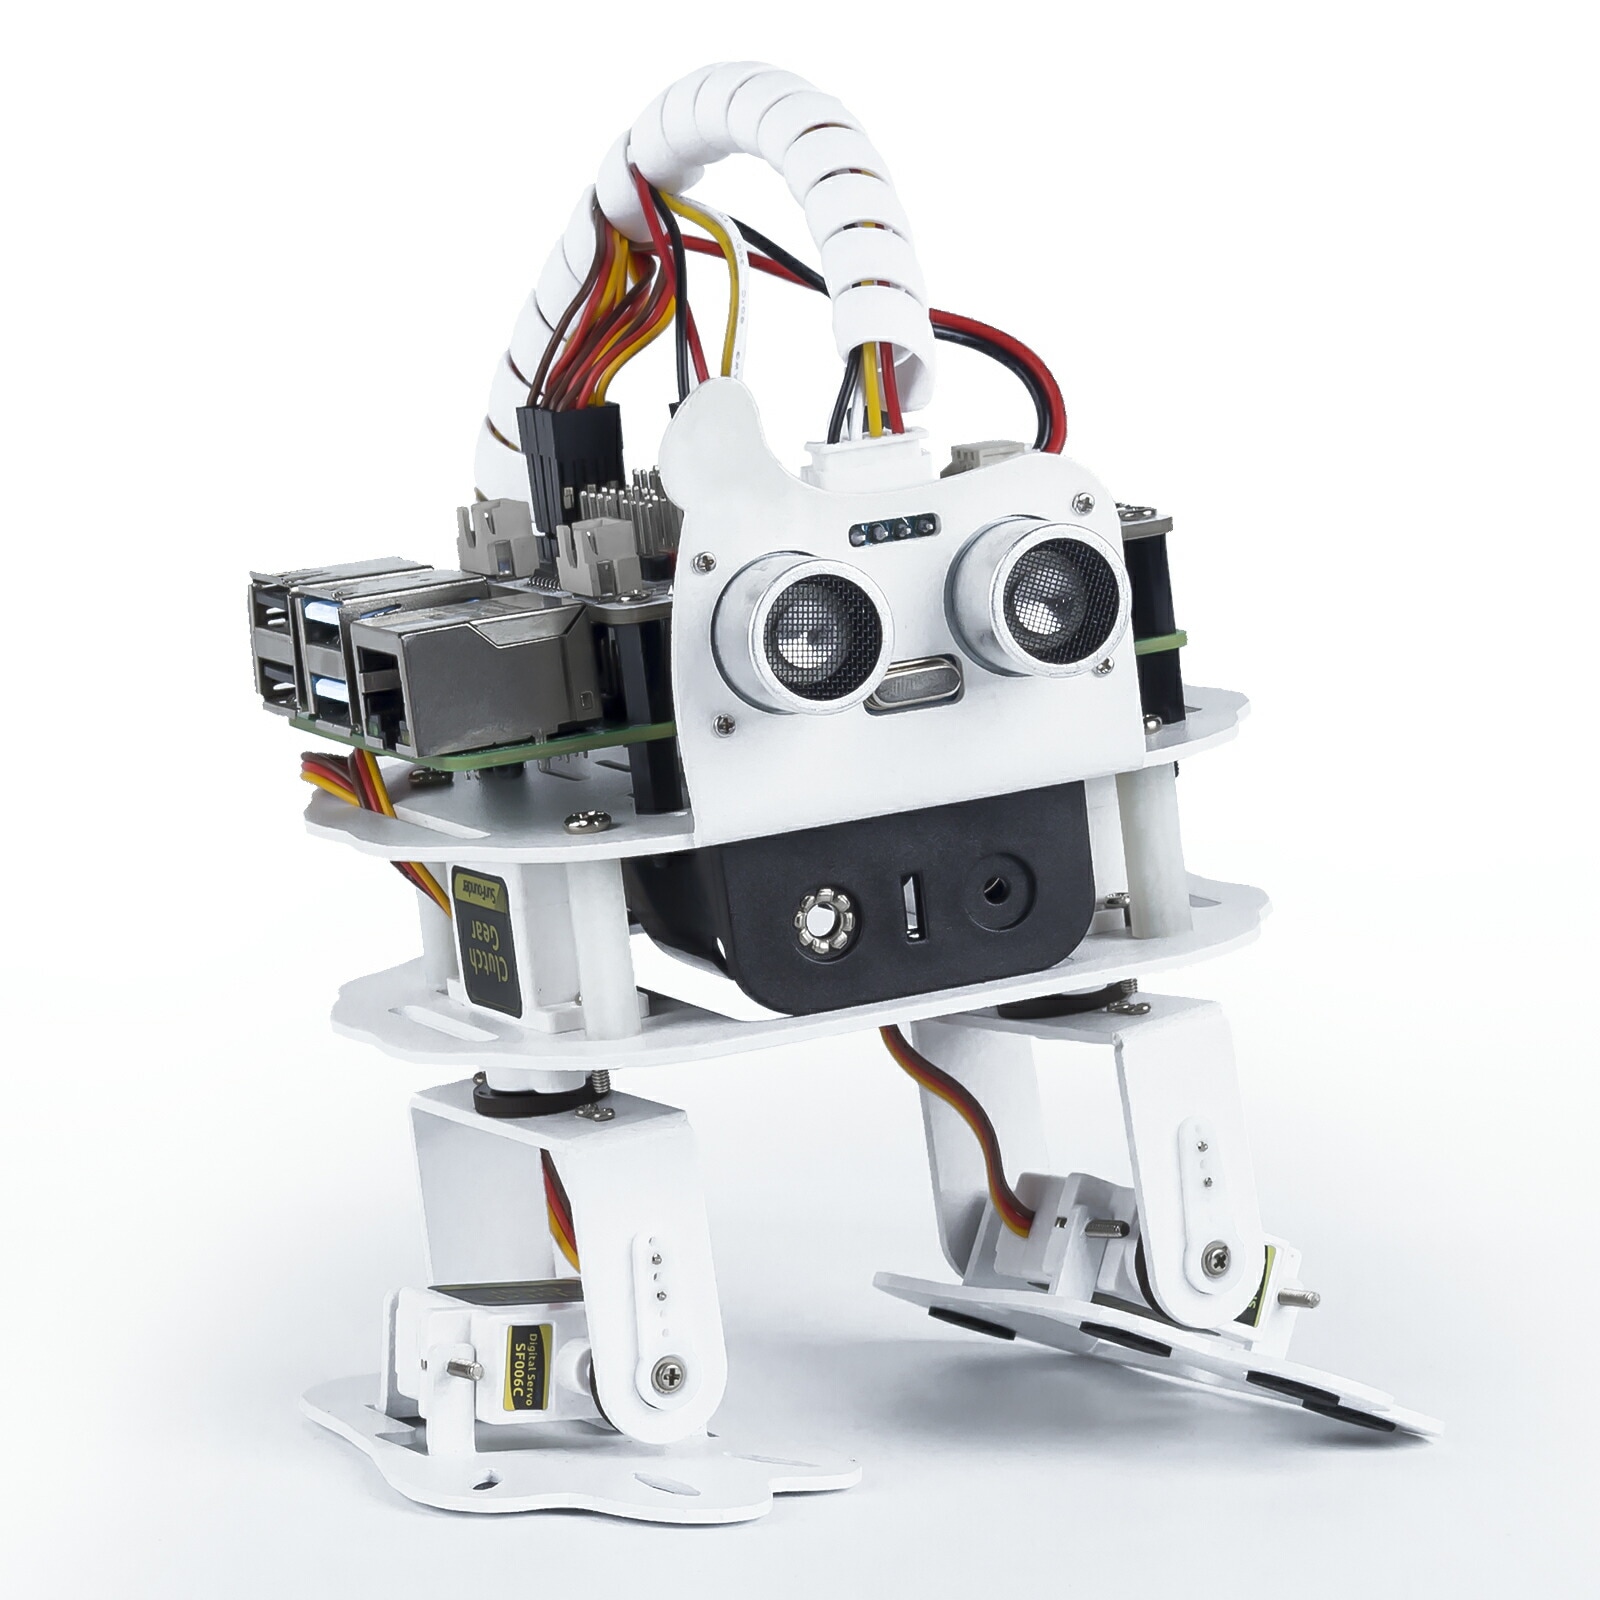 Raspberry Pi ロボット Sloth ラズベリーパイ AI プログラミング 4 DOF 2足ロボットキット 多機能DIYバイオニック踊りロボット スマホ タブレット 遠隔操作 Raspber